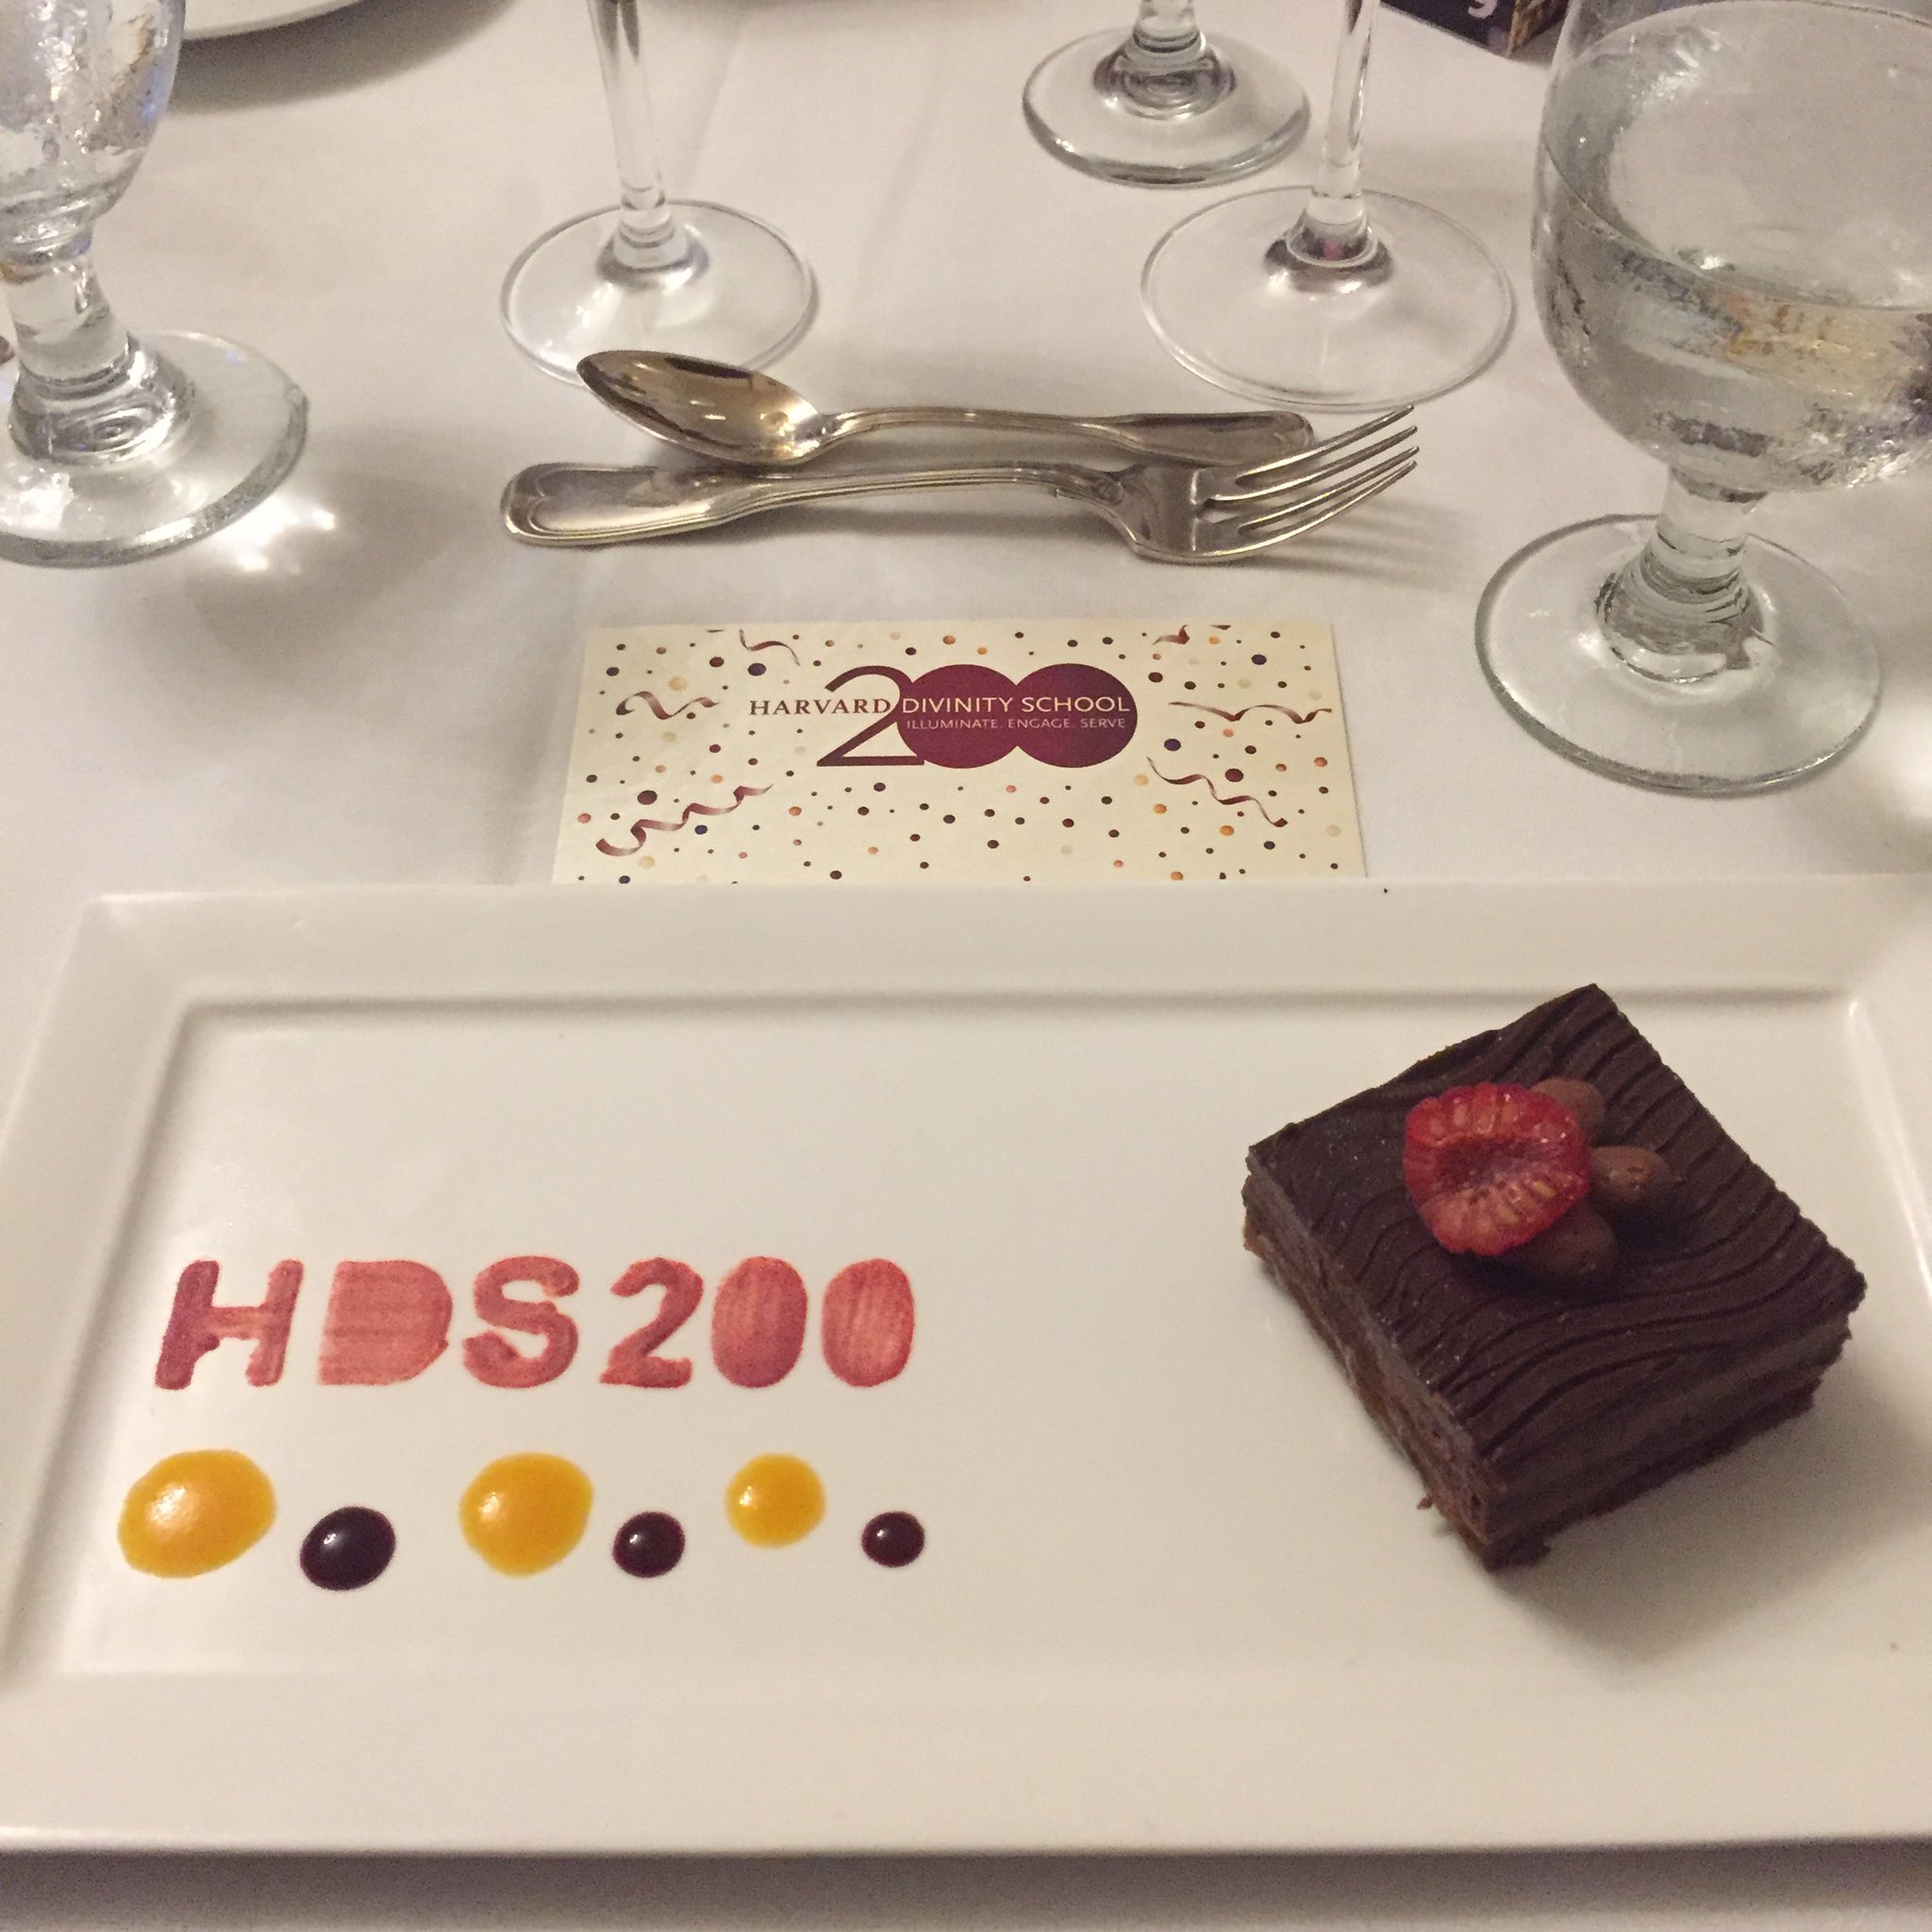 Great start to the @HarvardDivinity Bicentennial celebrations! #HDS200 https://t.co/3nHANjGNgP